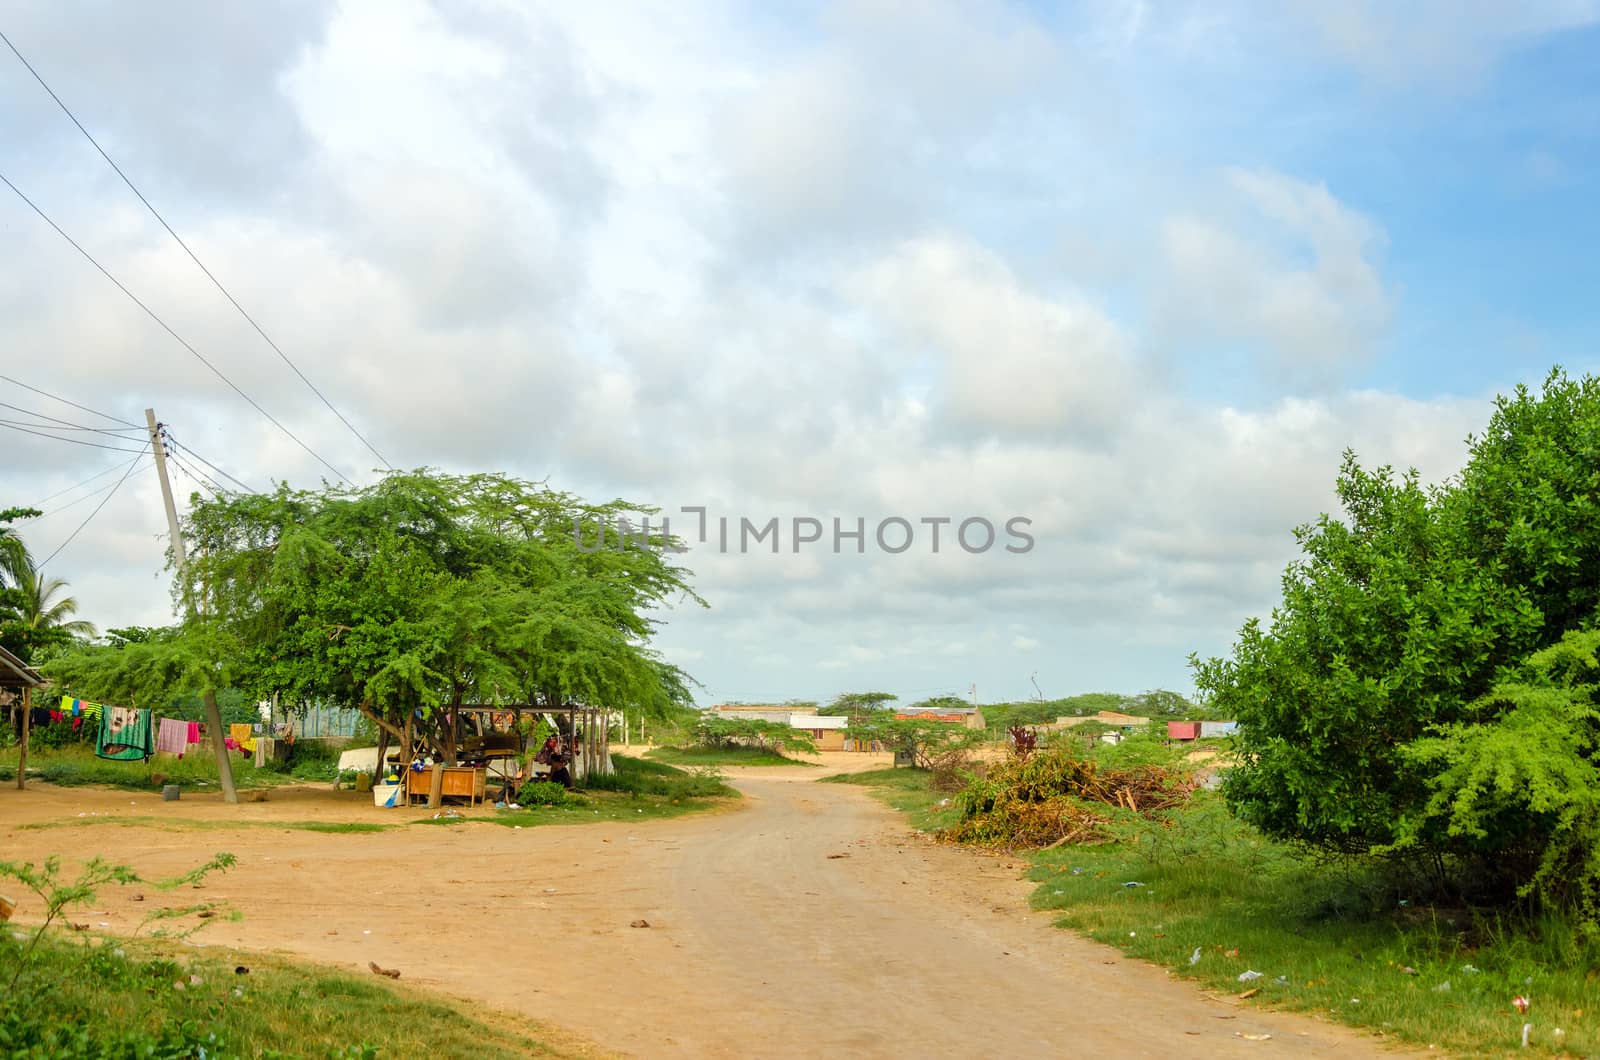 Dirt road passing through a rural village in La Guajira, Colombia